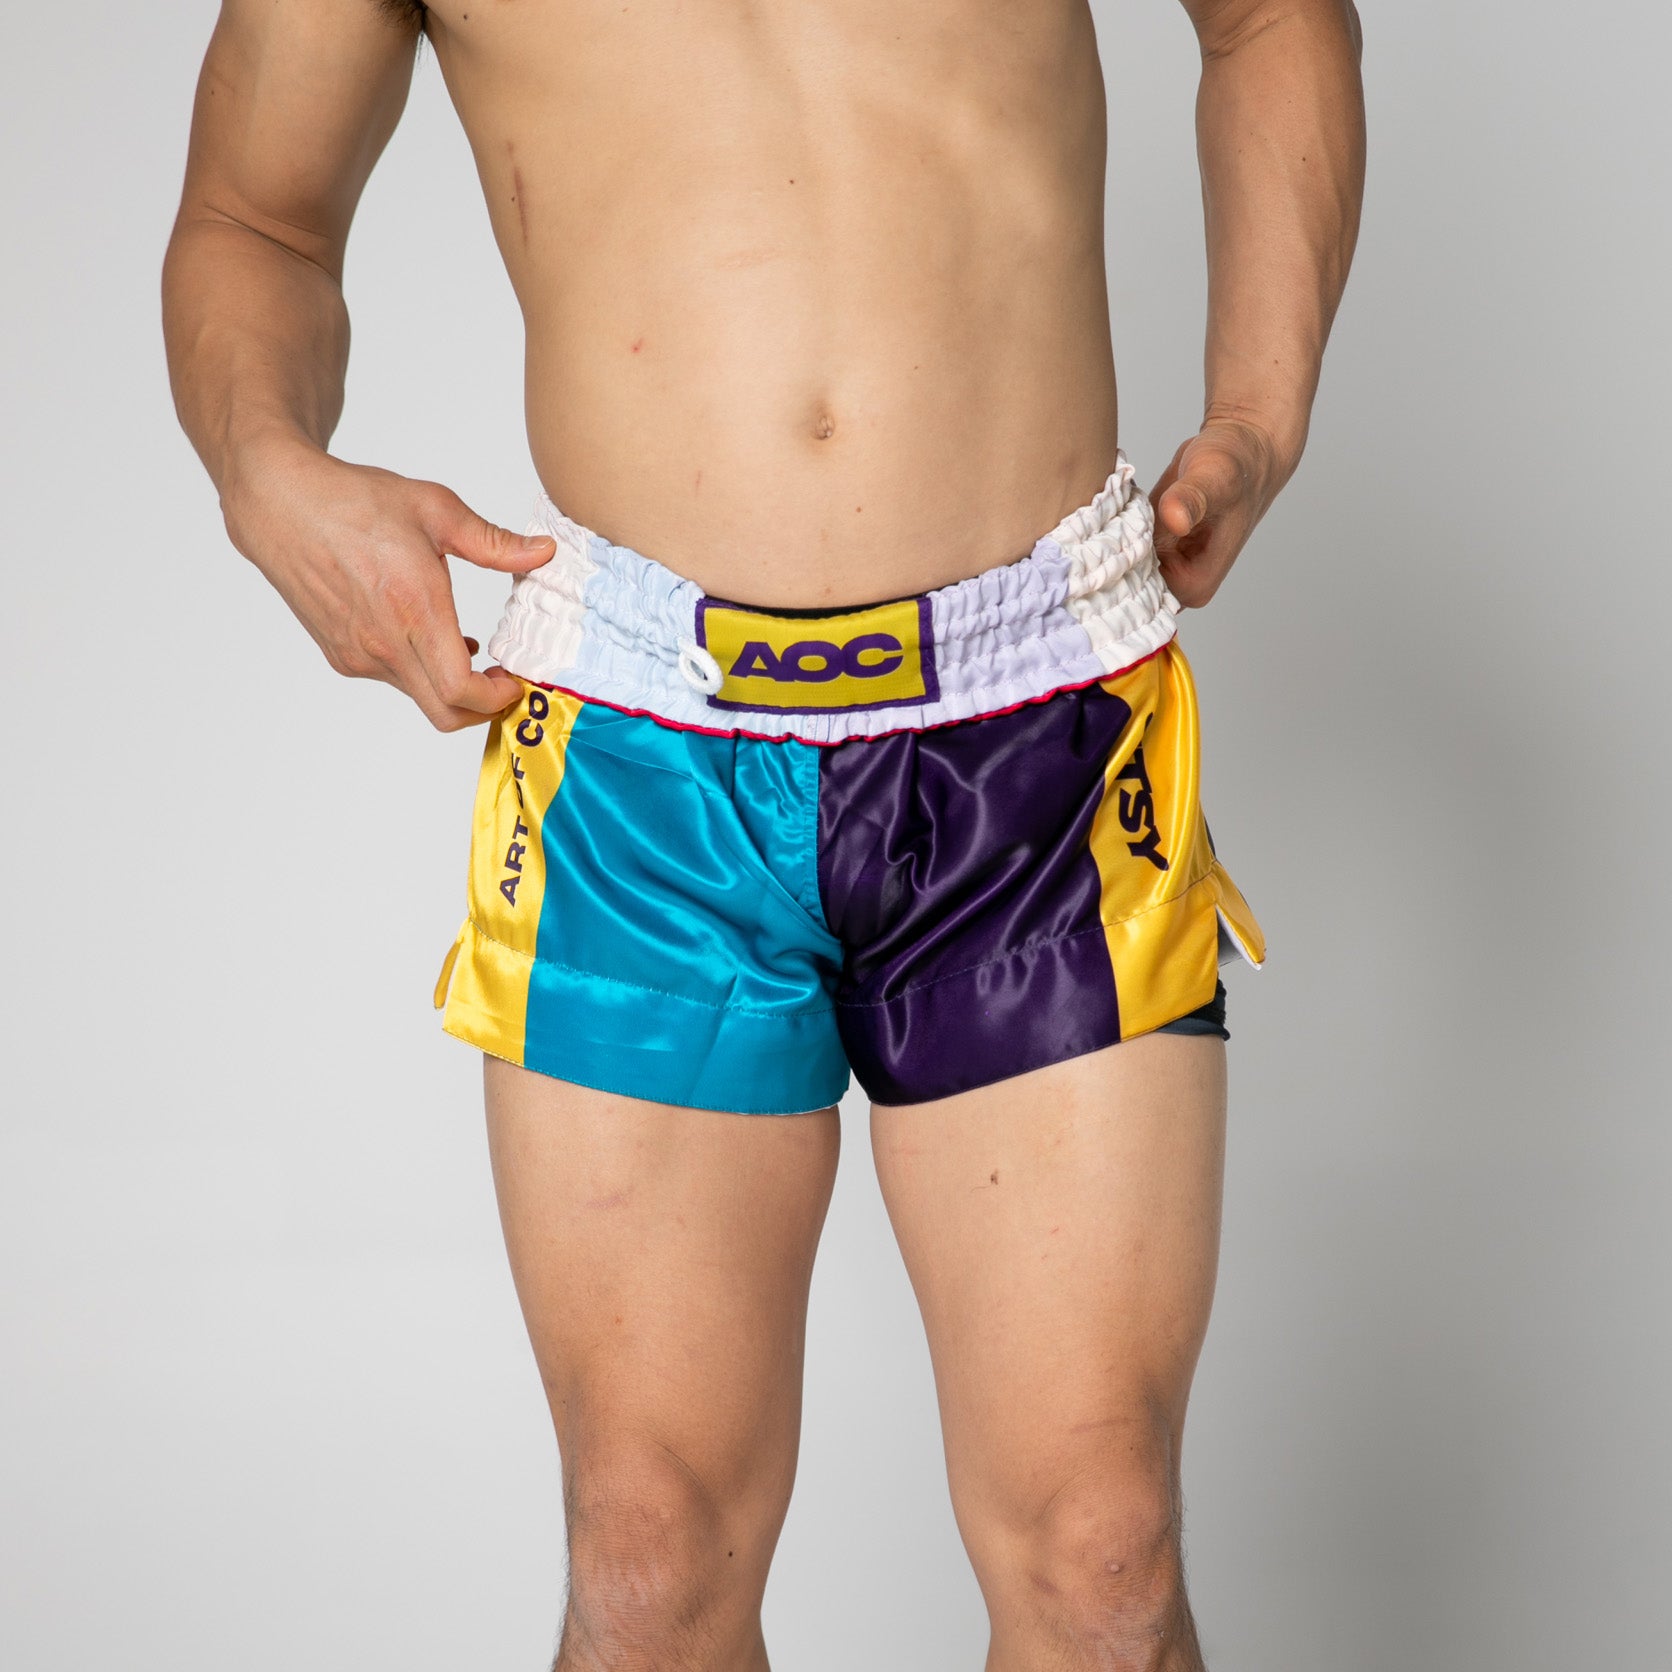 90's Baby Muay Thai Shorts - Men